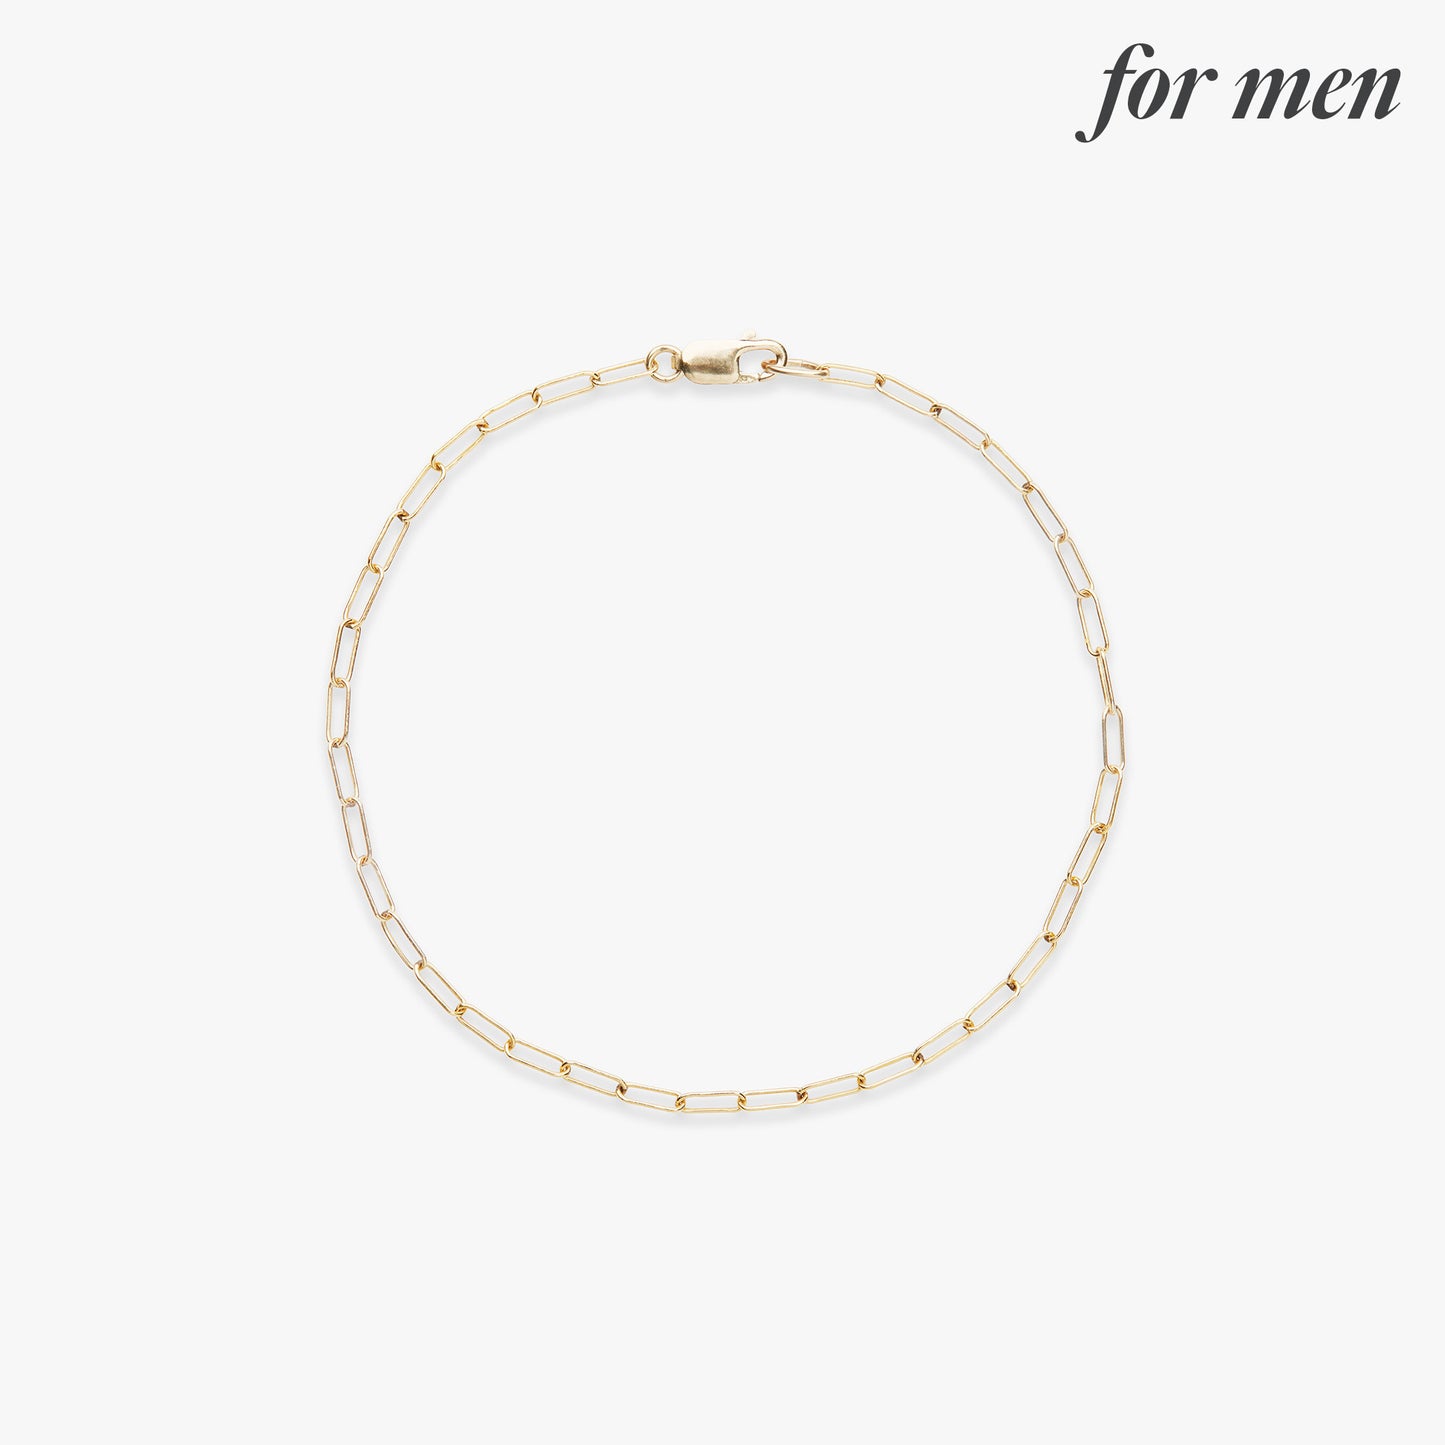 Paperclip chain bracelet gold filled for men